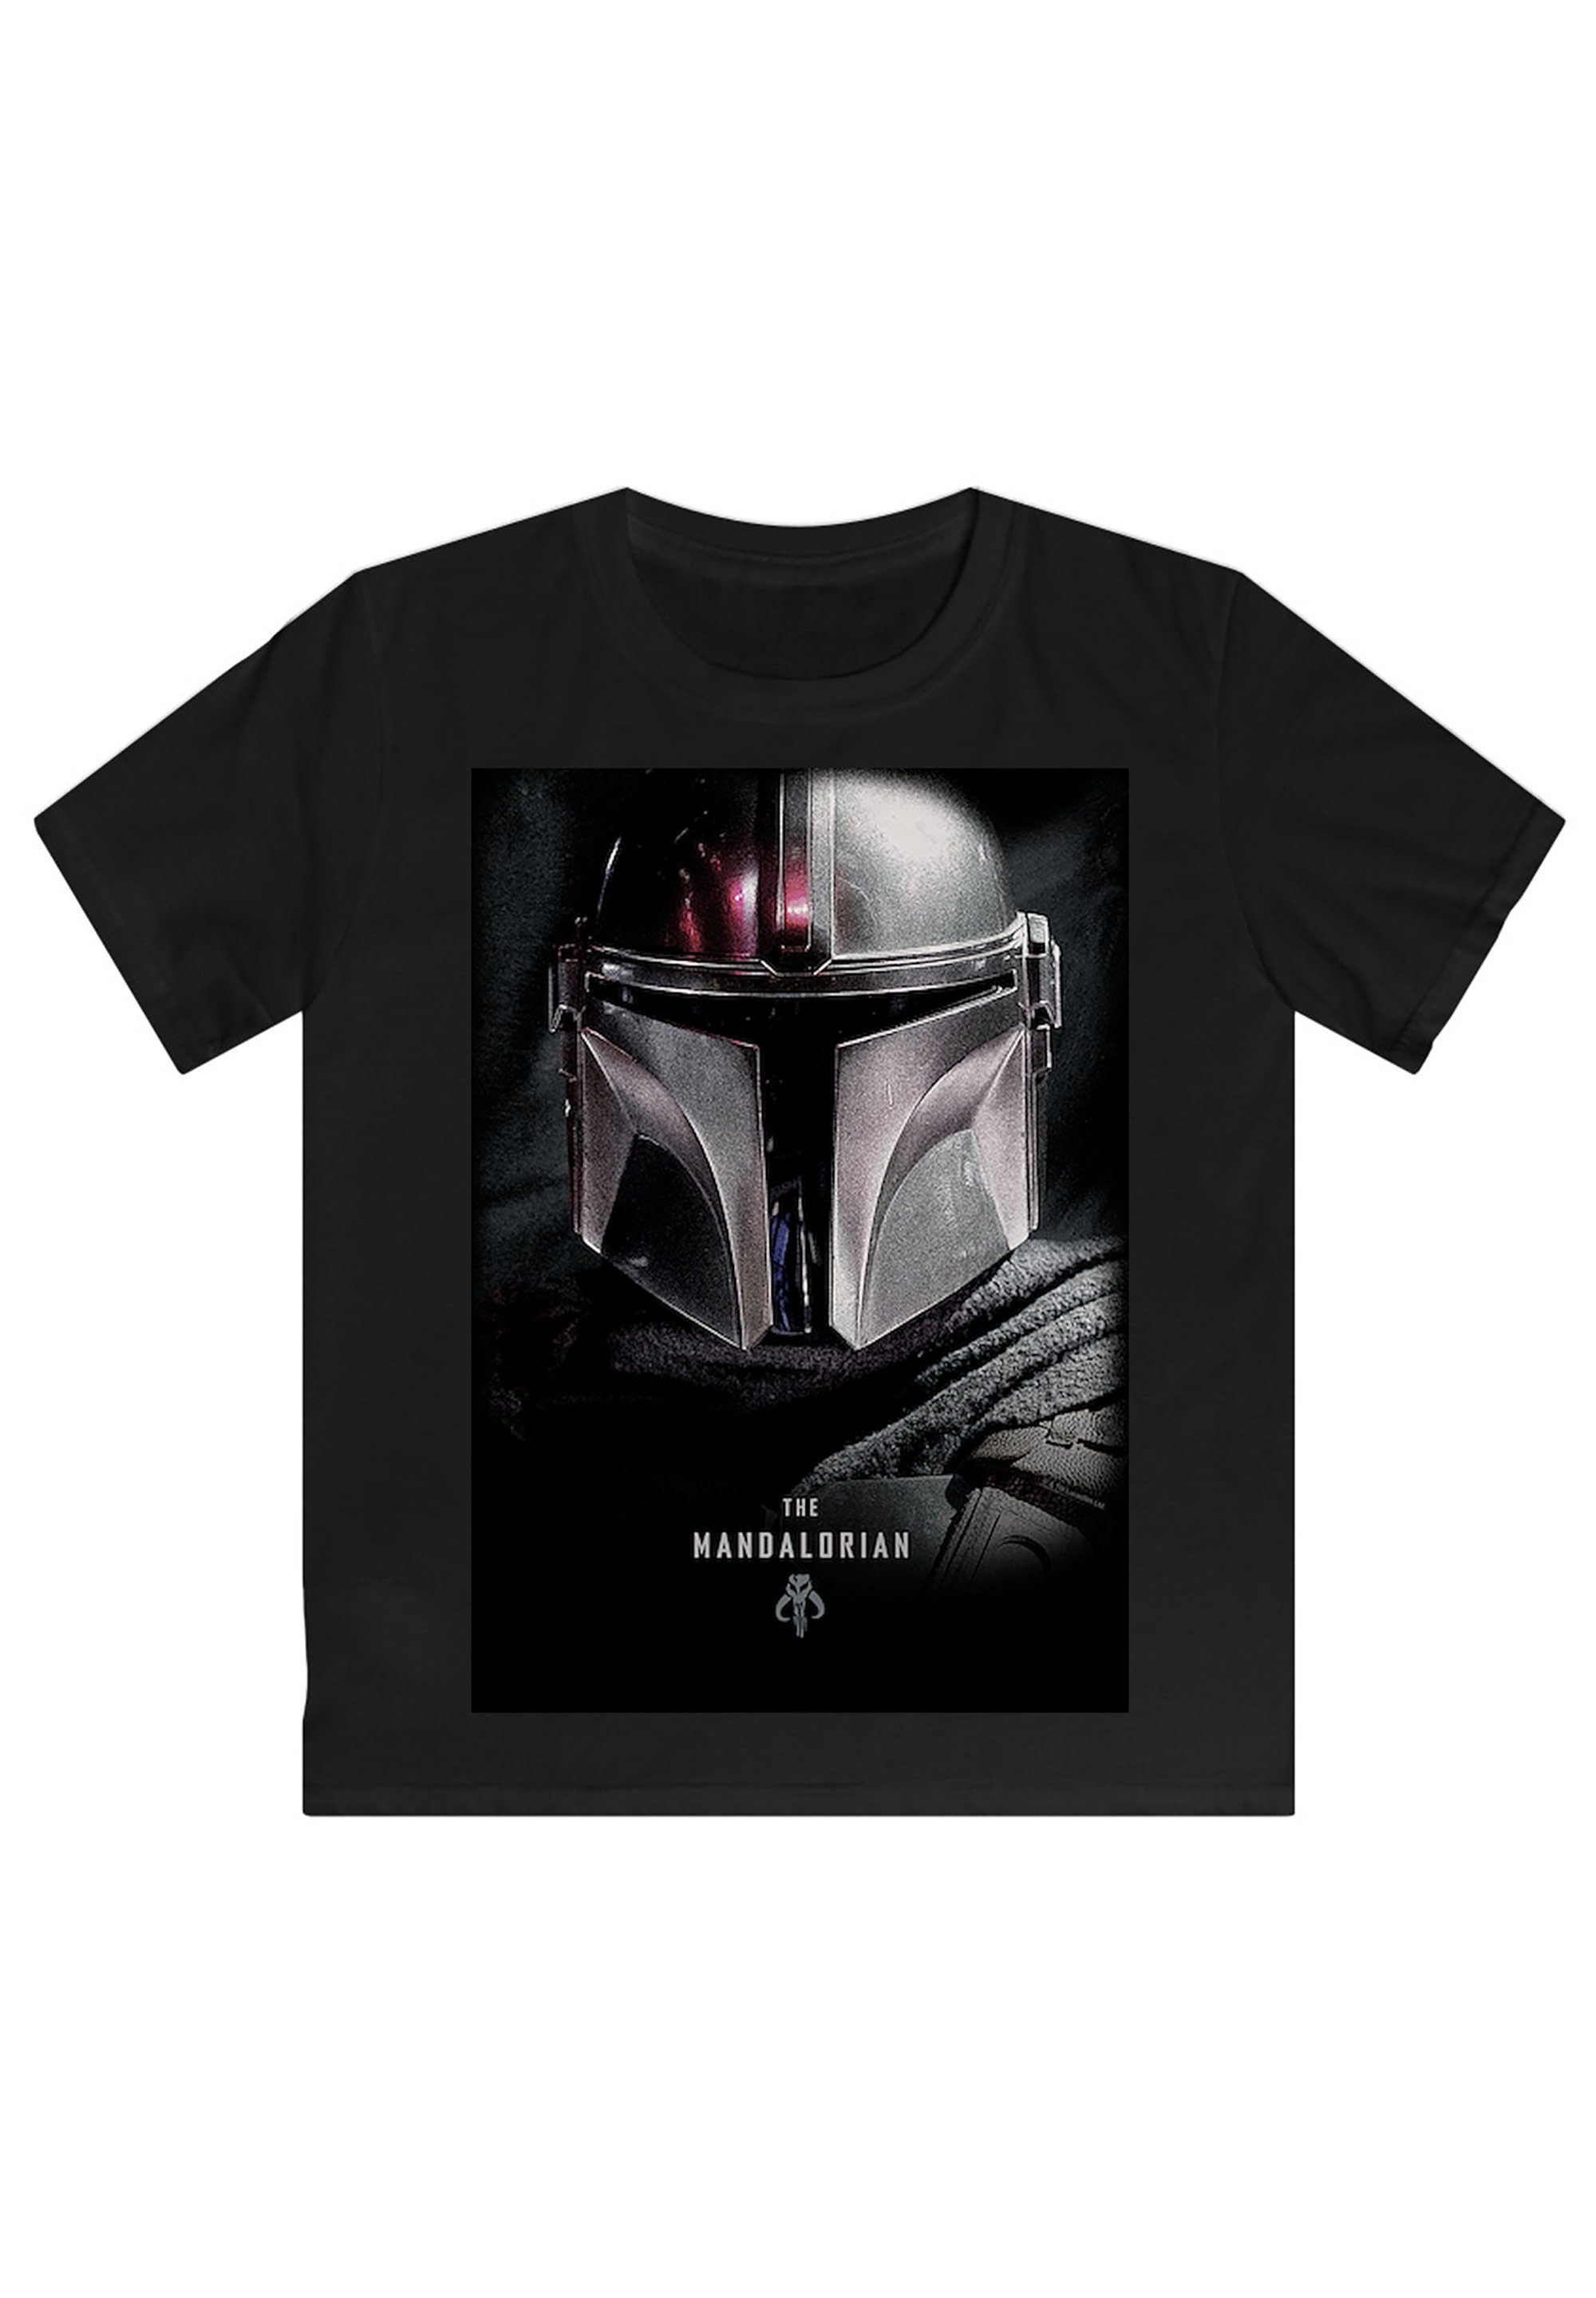 The Star Print Wars F4NT4STIC Poster Mandalorian T-Shirt